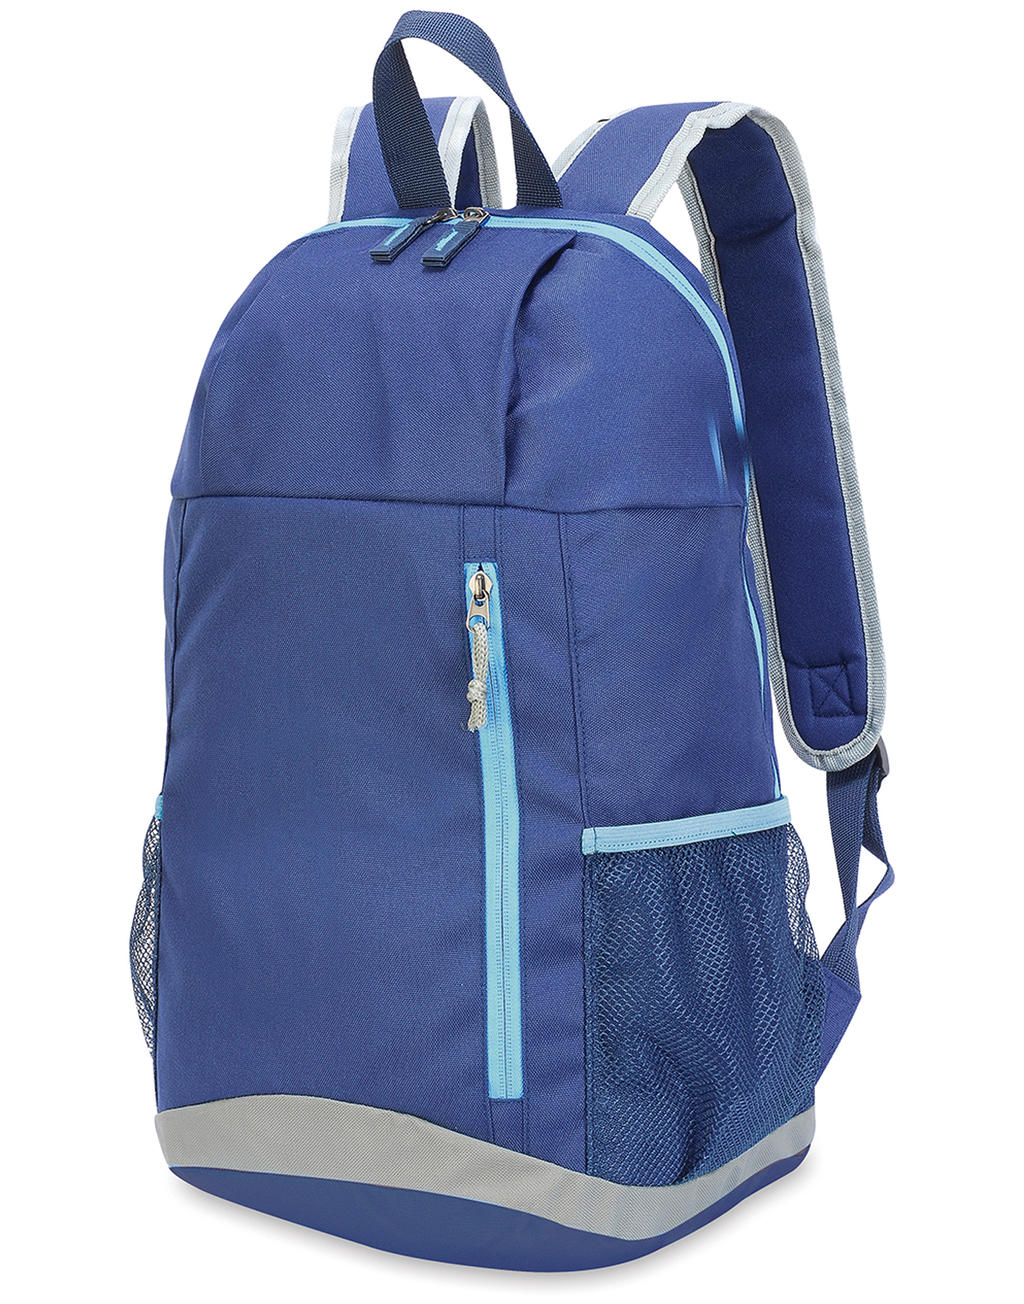  York Basic Backpack in Farbe French Navy/Sky Blue/Light Grey